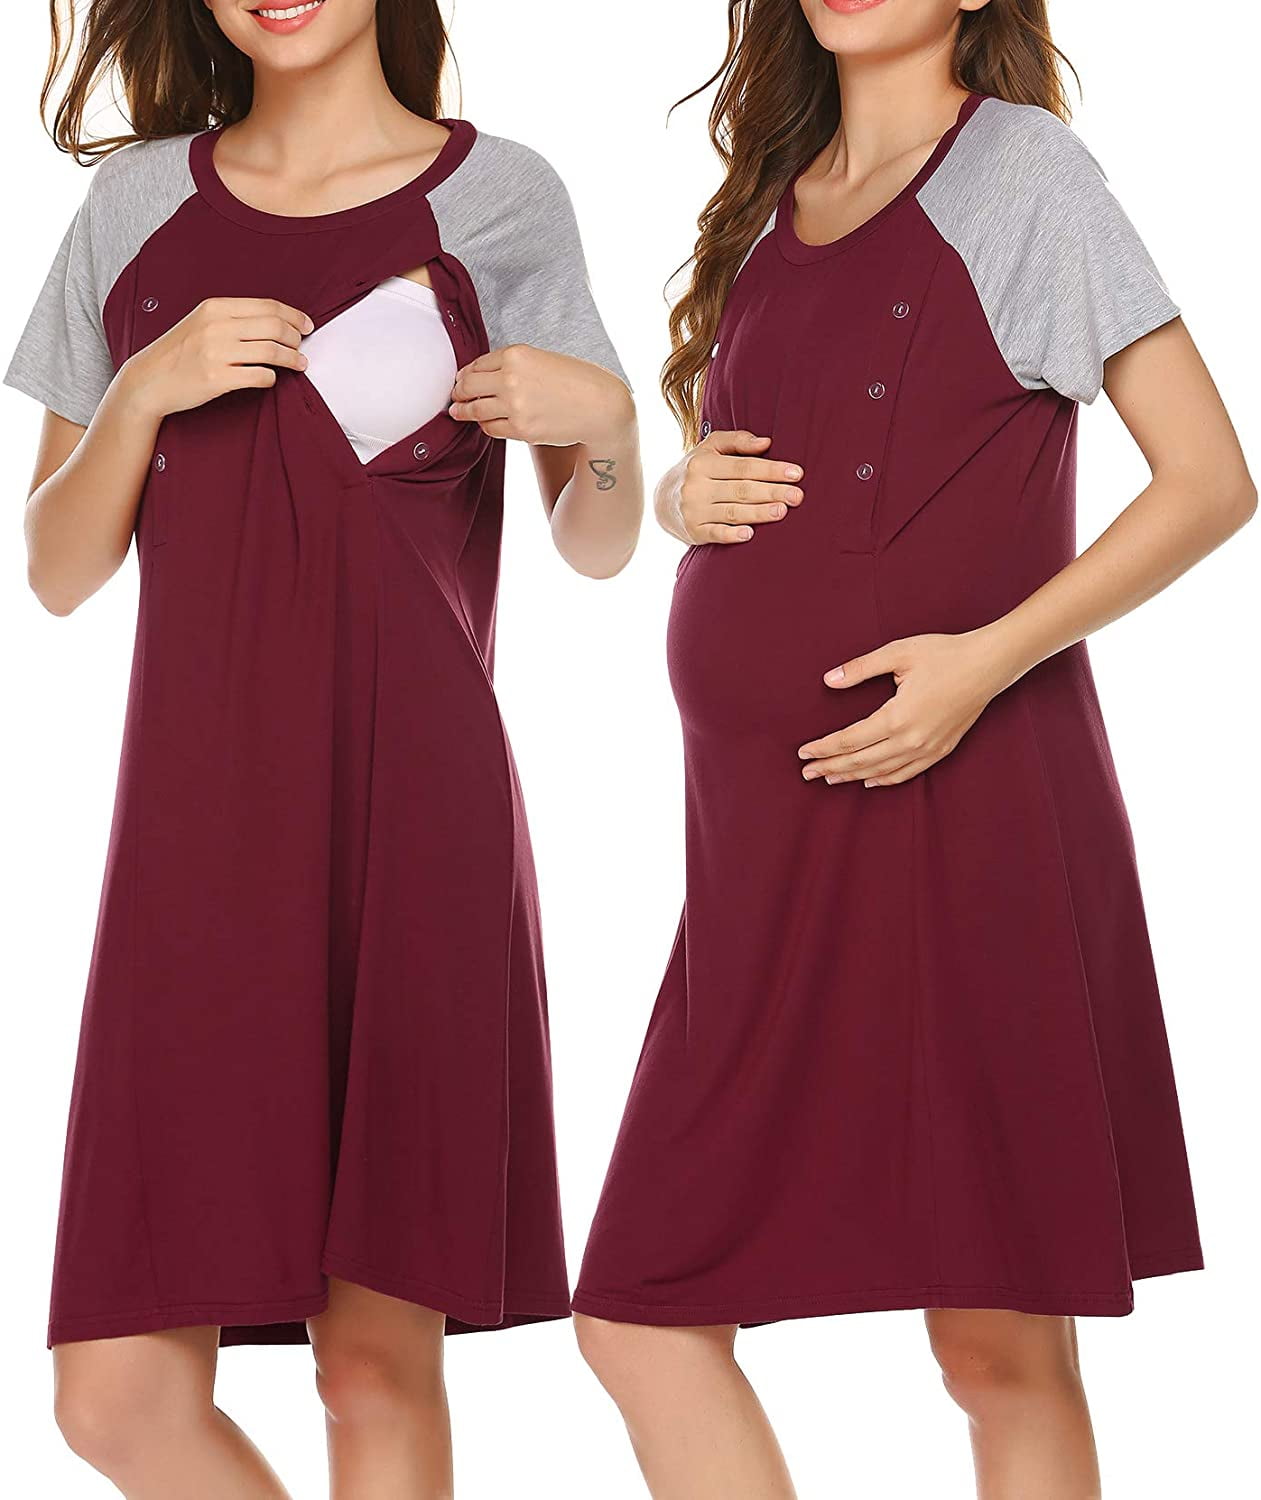 Women's Nursing Nightgown Labor Delivery Gown Hospital Maternity Sleepwear  Breastfeeding Night Dress 